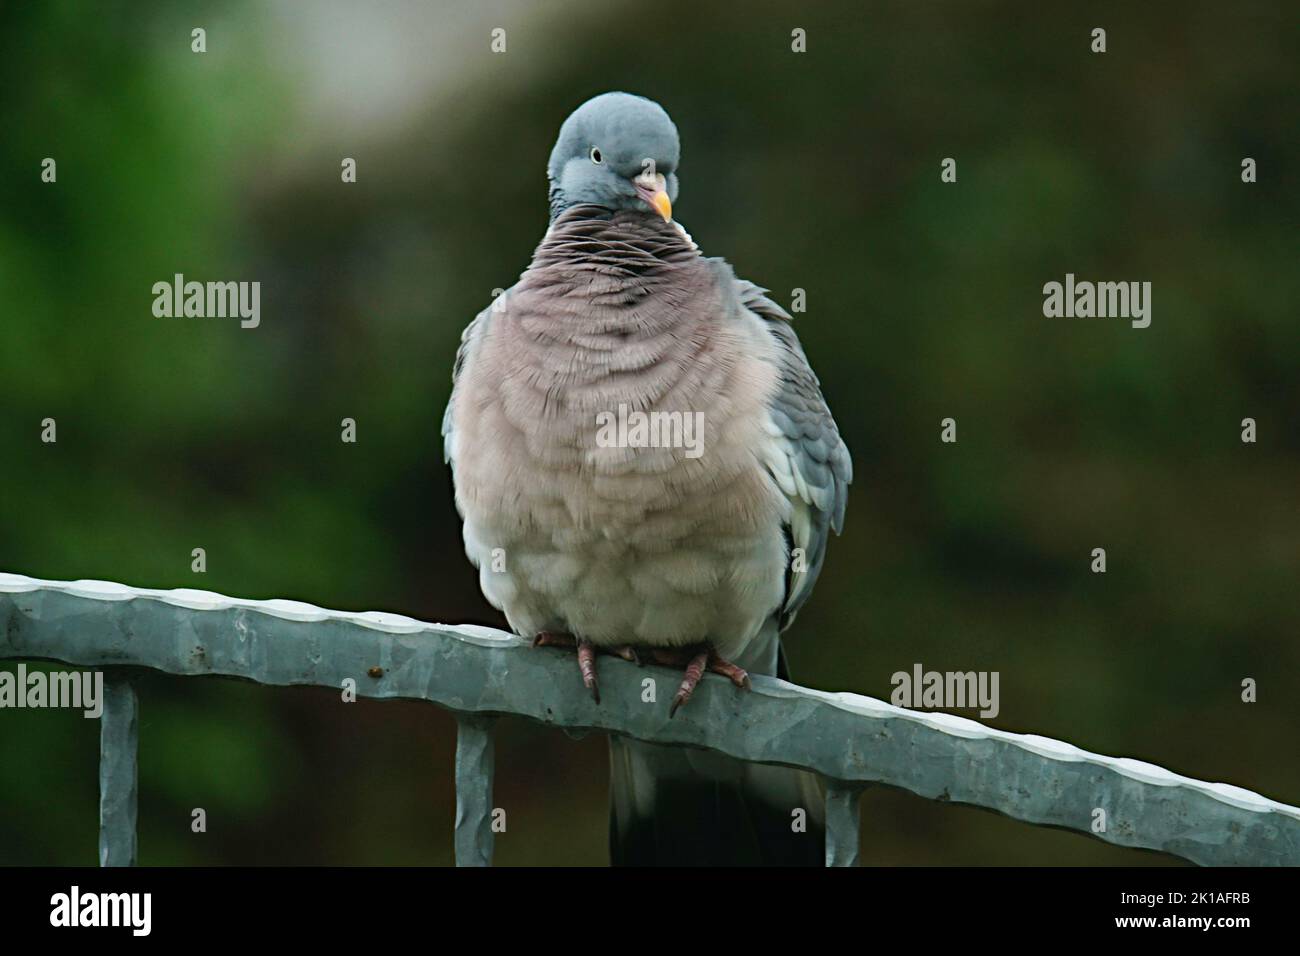 Taube auf einem Zaun sitzend Foto de stock